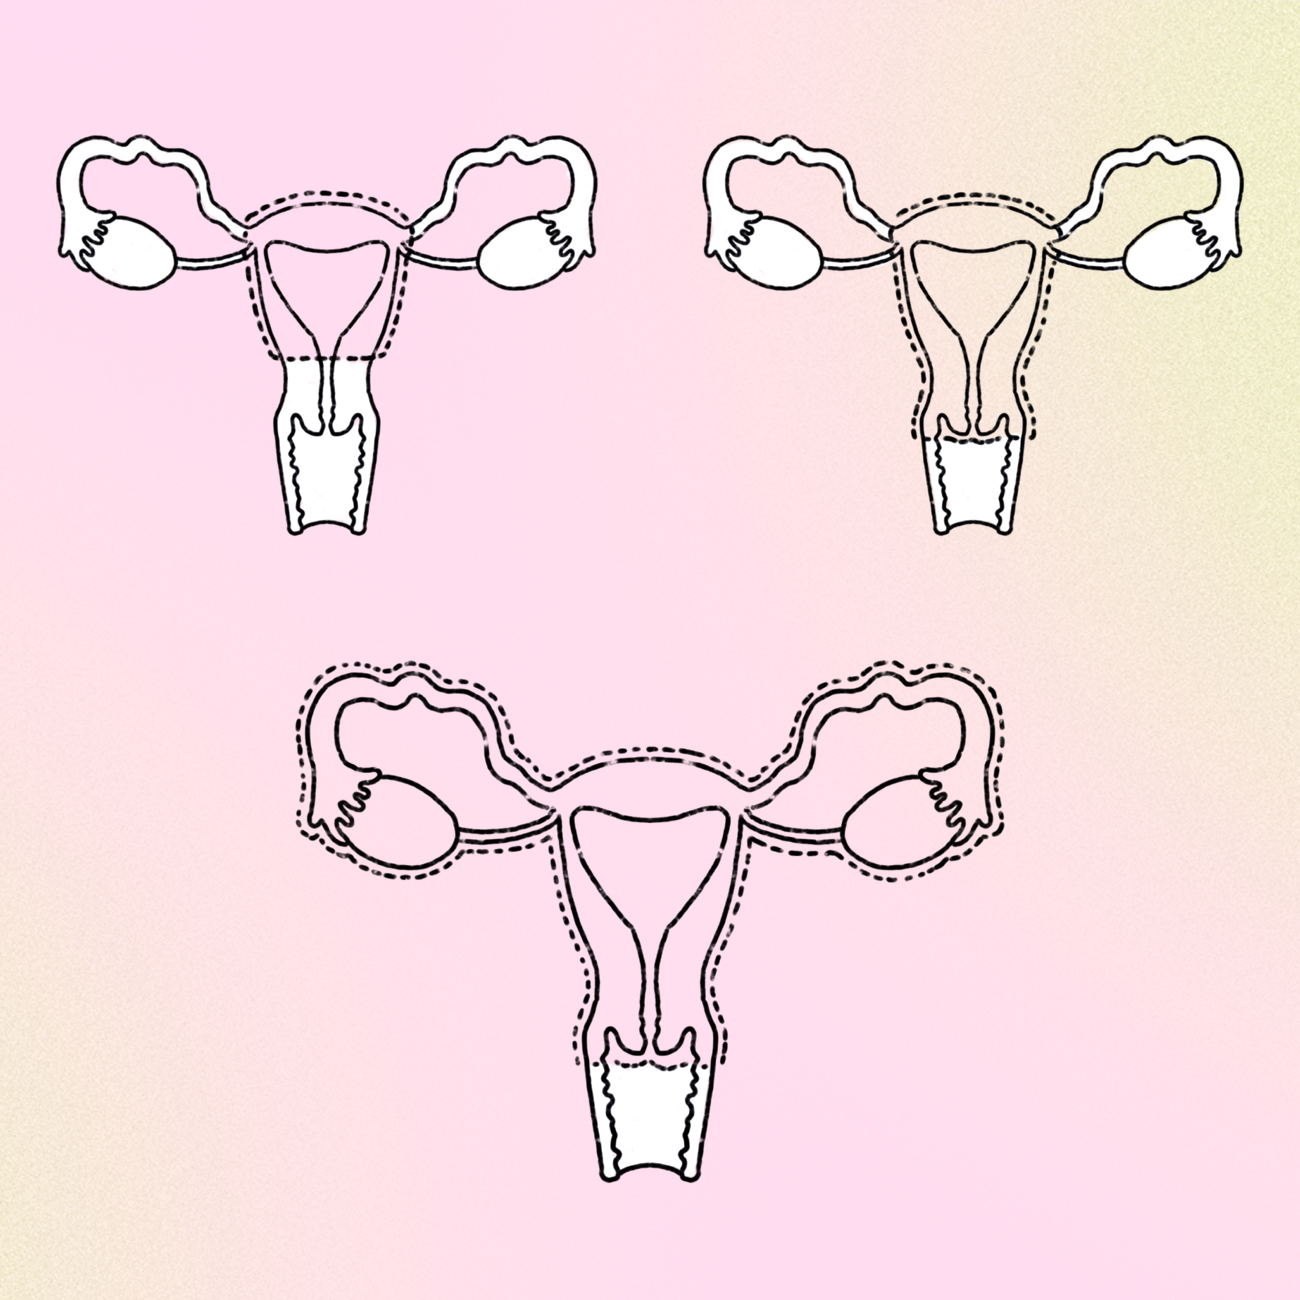 Three different types of gender affirming hysterectomy procedures.